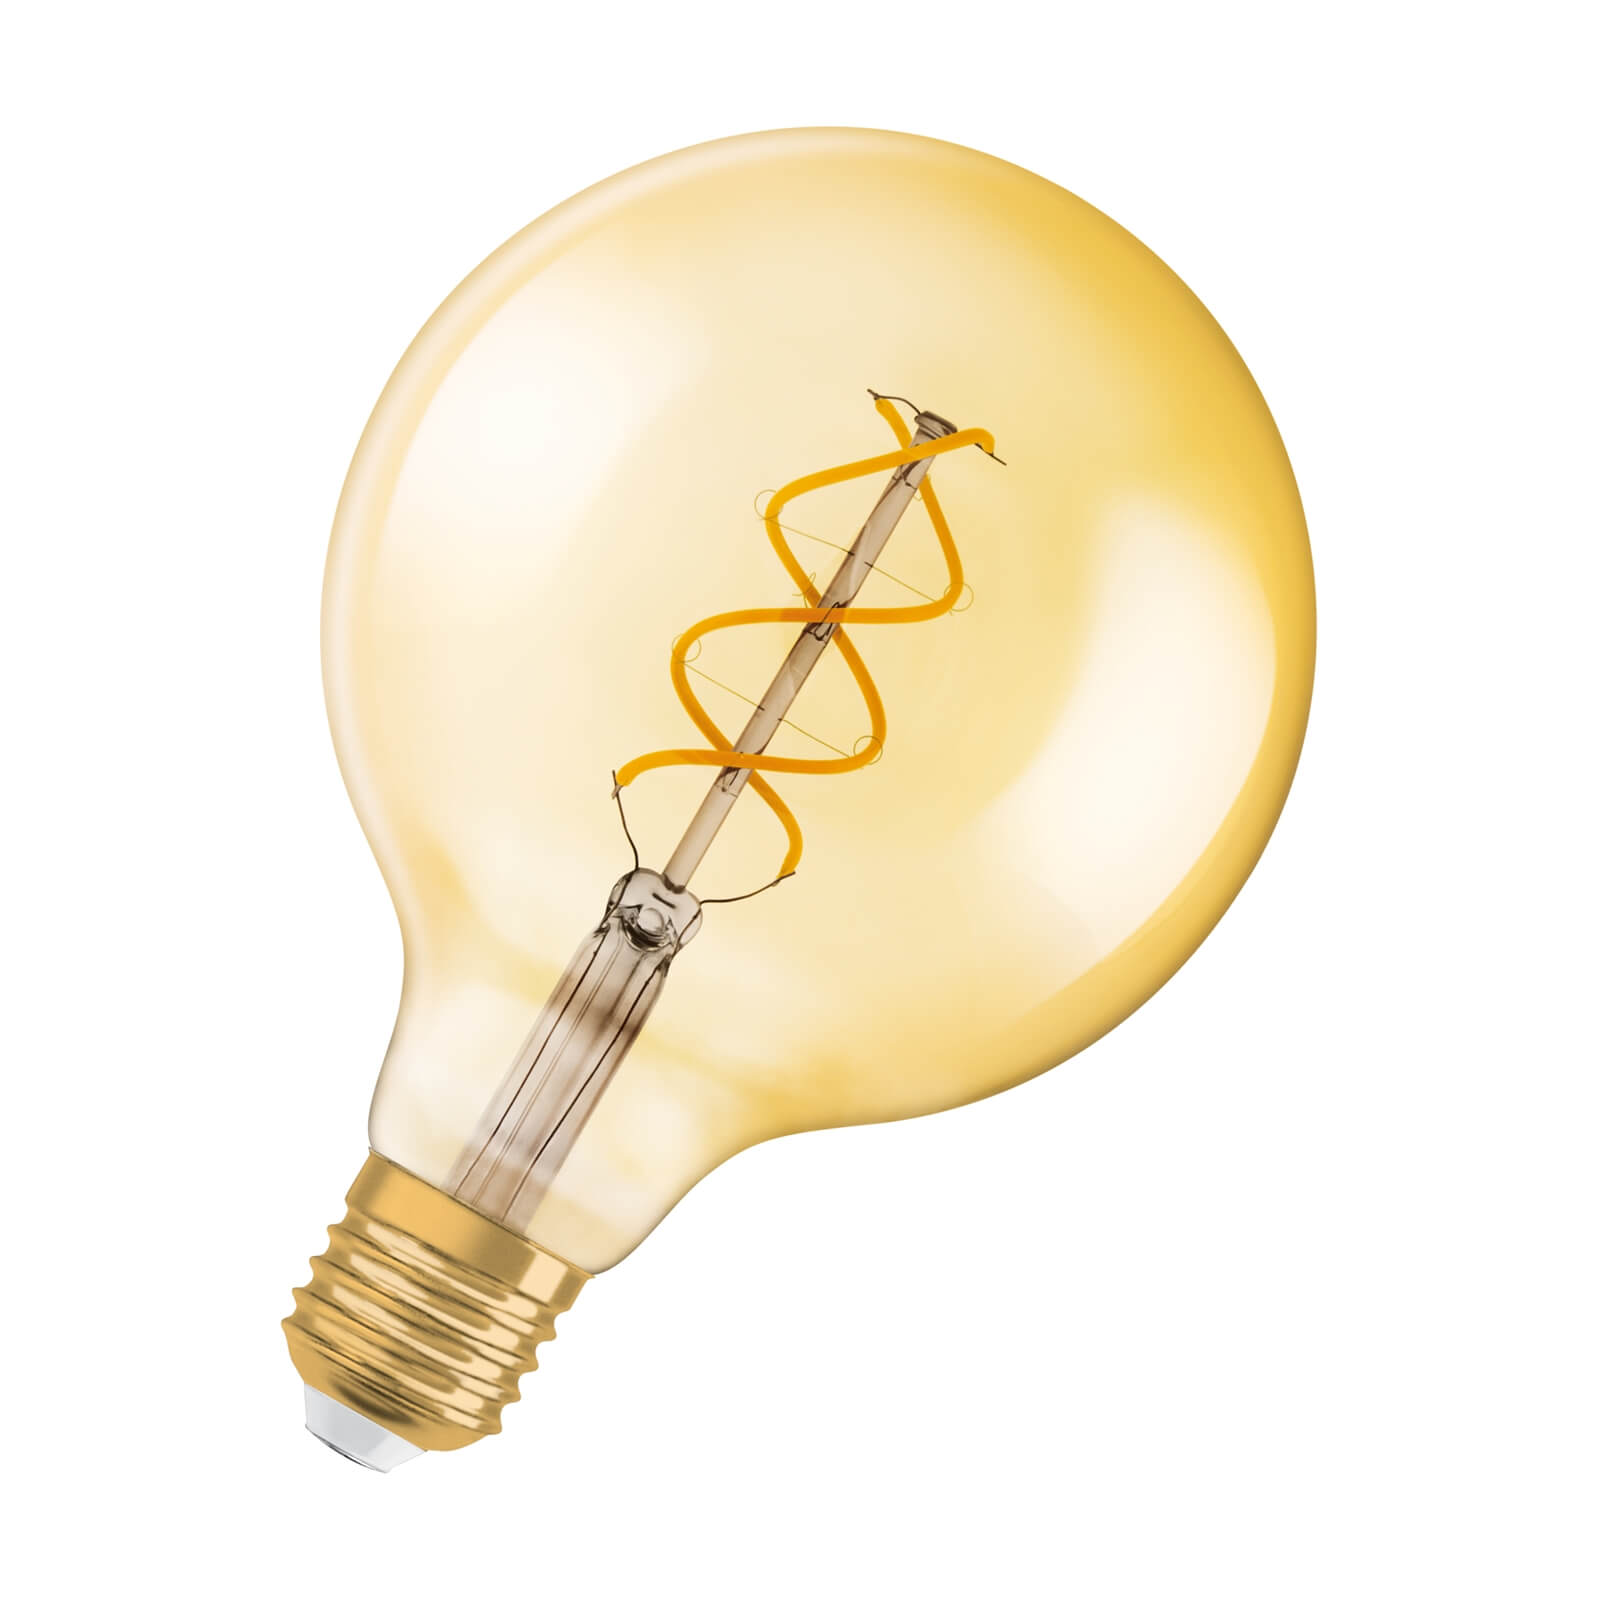 Osram 1906 LED Globe125 Vintage Gold 25W ES Light Bulb